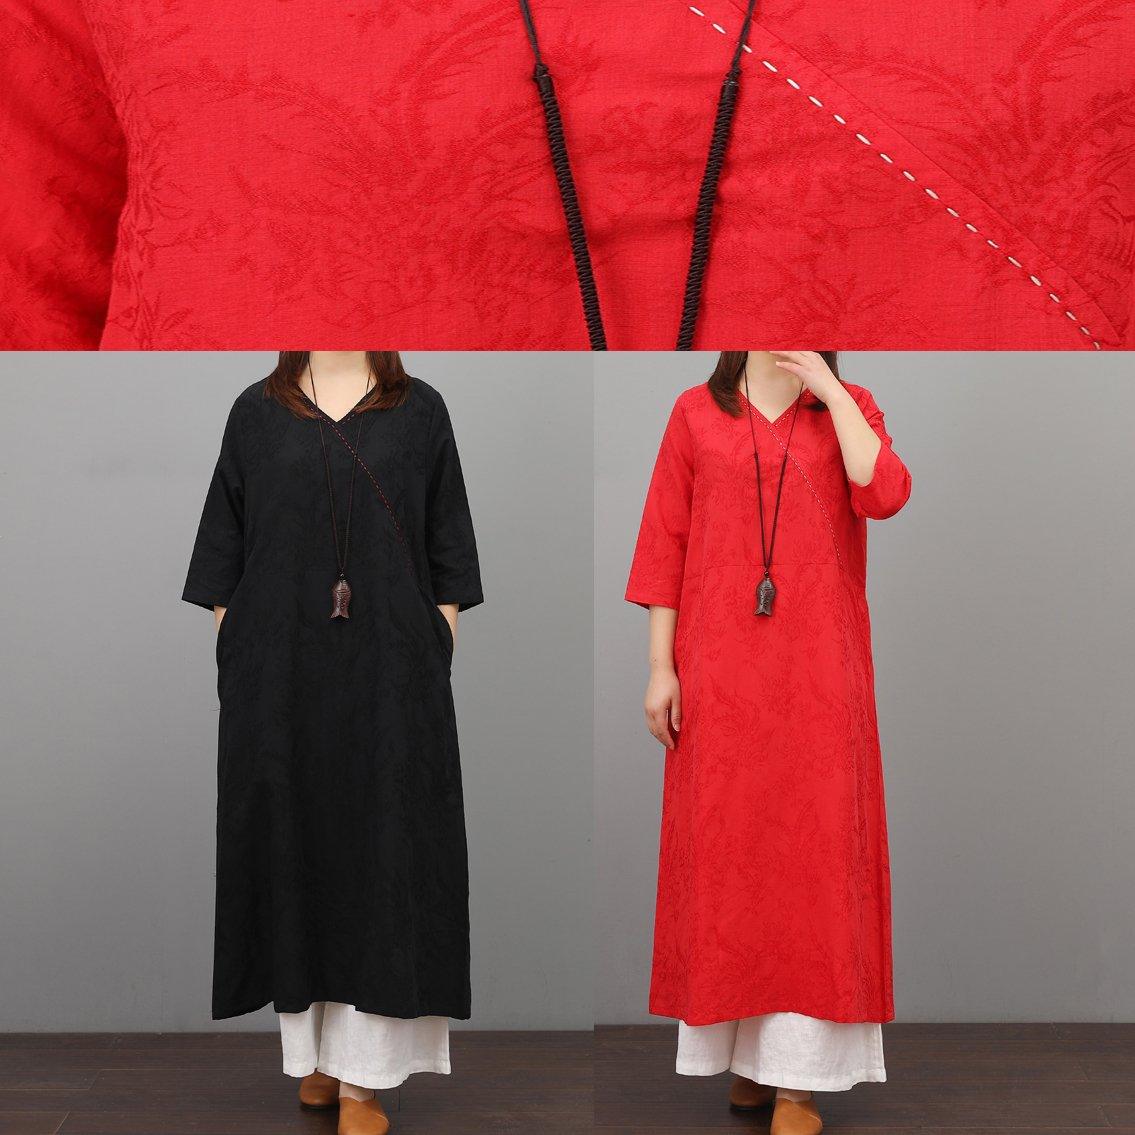 Chic jacquard cotton dresses Catwalk red Dress summer - Omychic